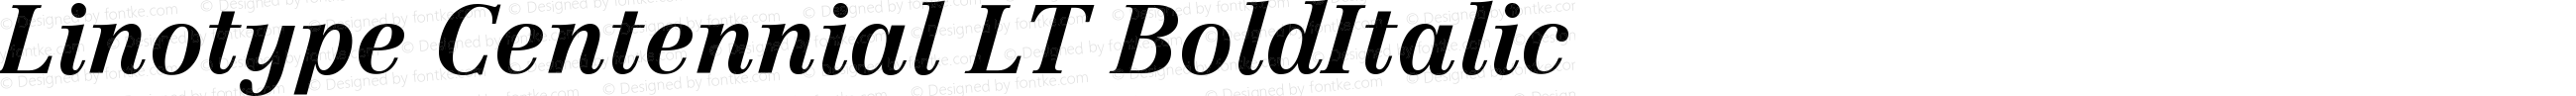 Linotype Centennial LT 76 Bold Italic